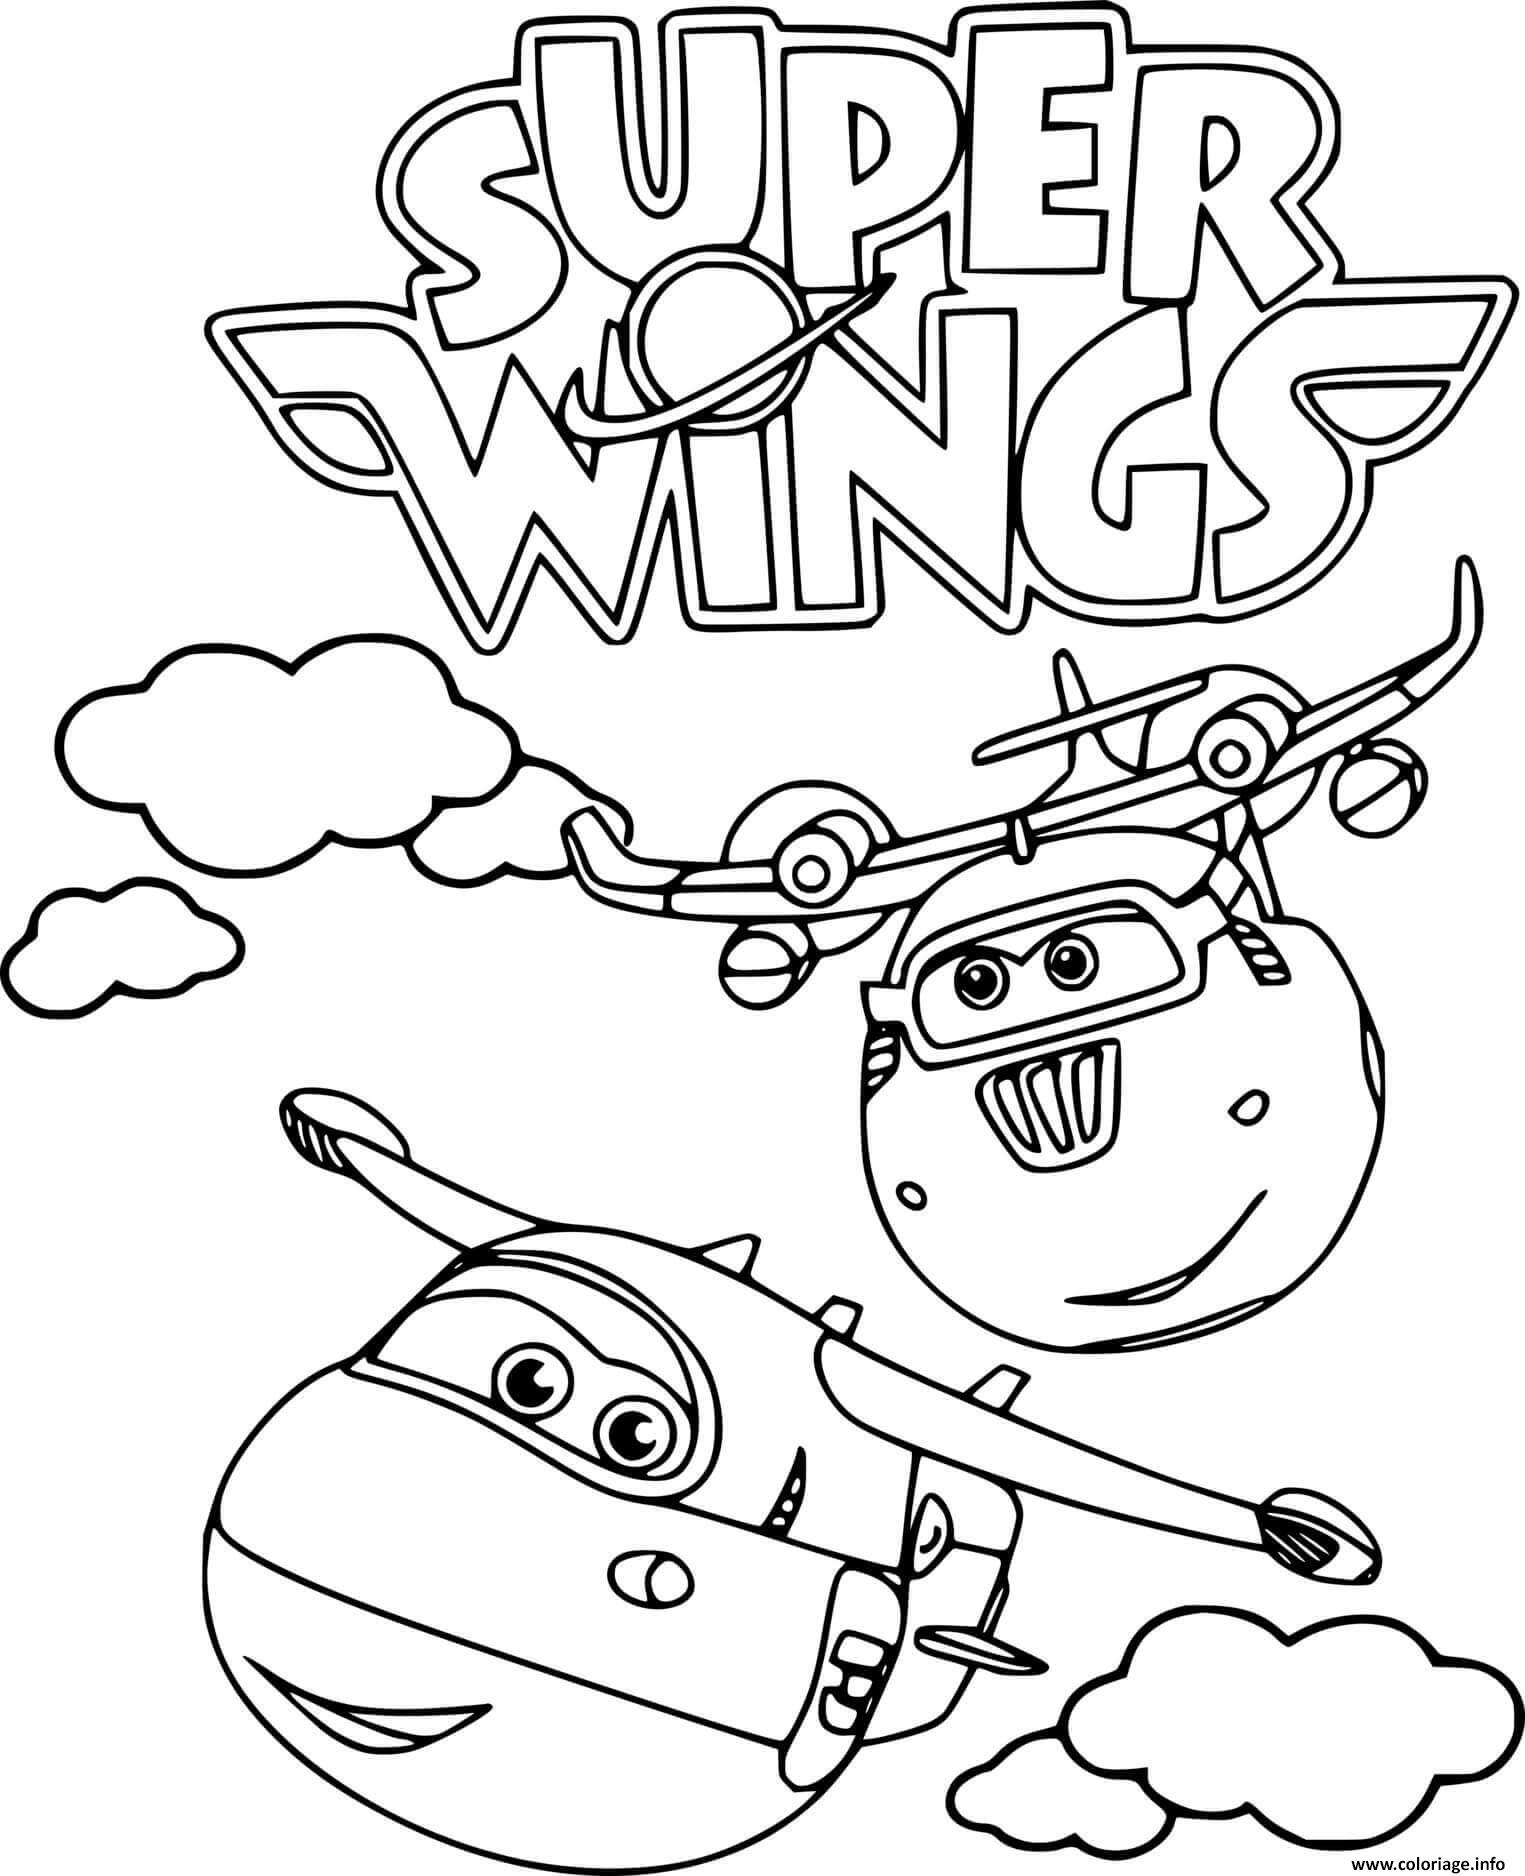 Coloriage Avions De Super Wings Dessin à Imprimer